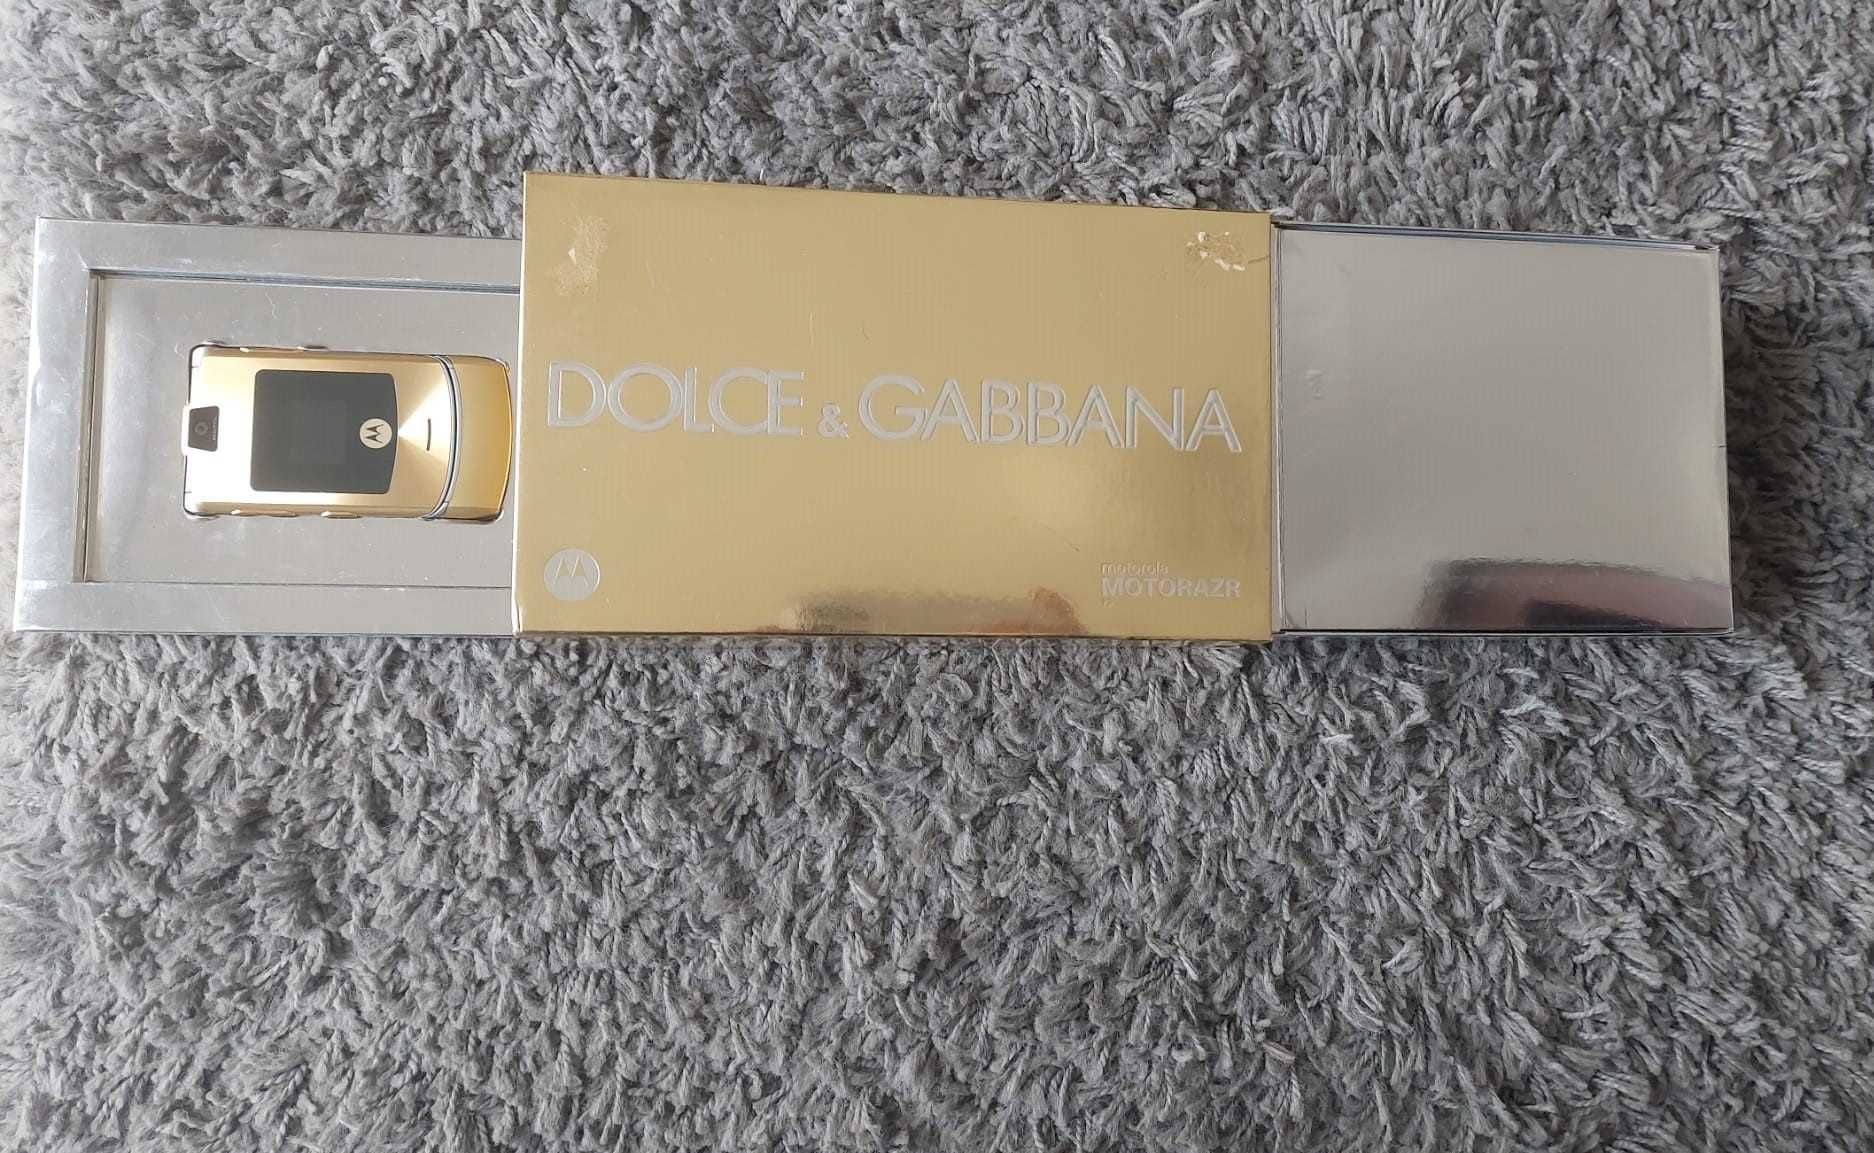 Telemóvel Motorola Motorazr V3i Dolce & Gabbana GOLD NUNCA LIGADO